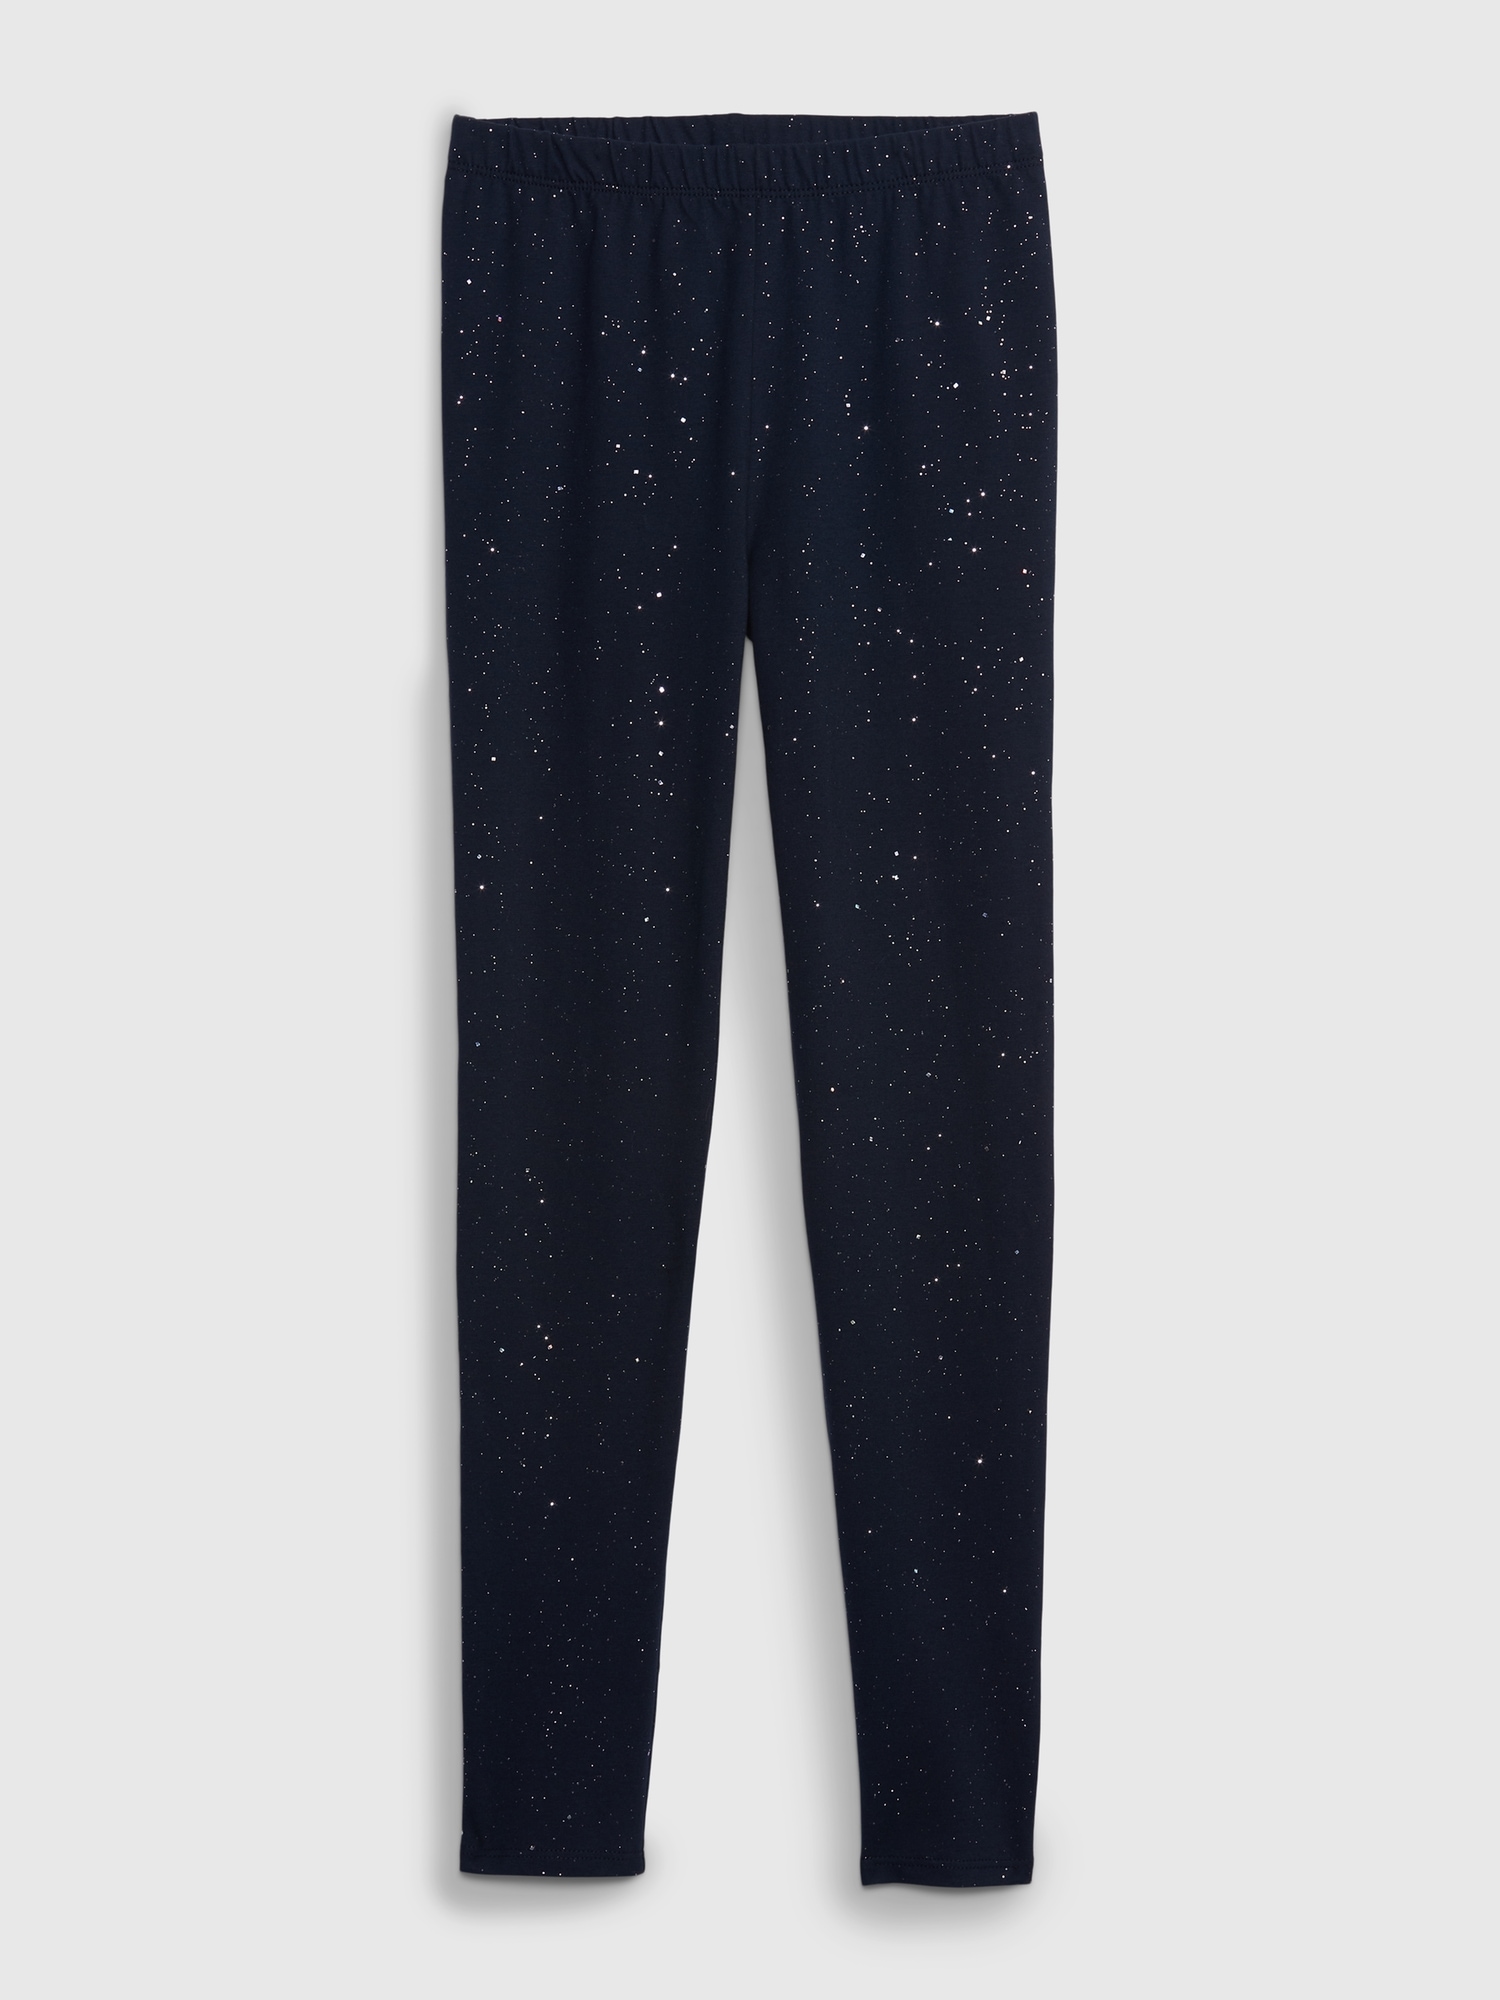 shimmer leggings – The Pajama Factory